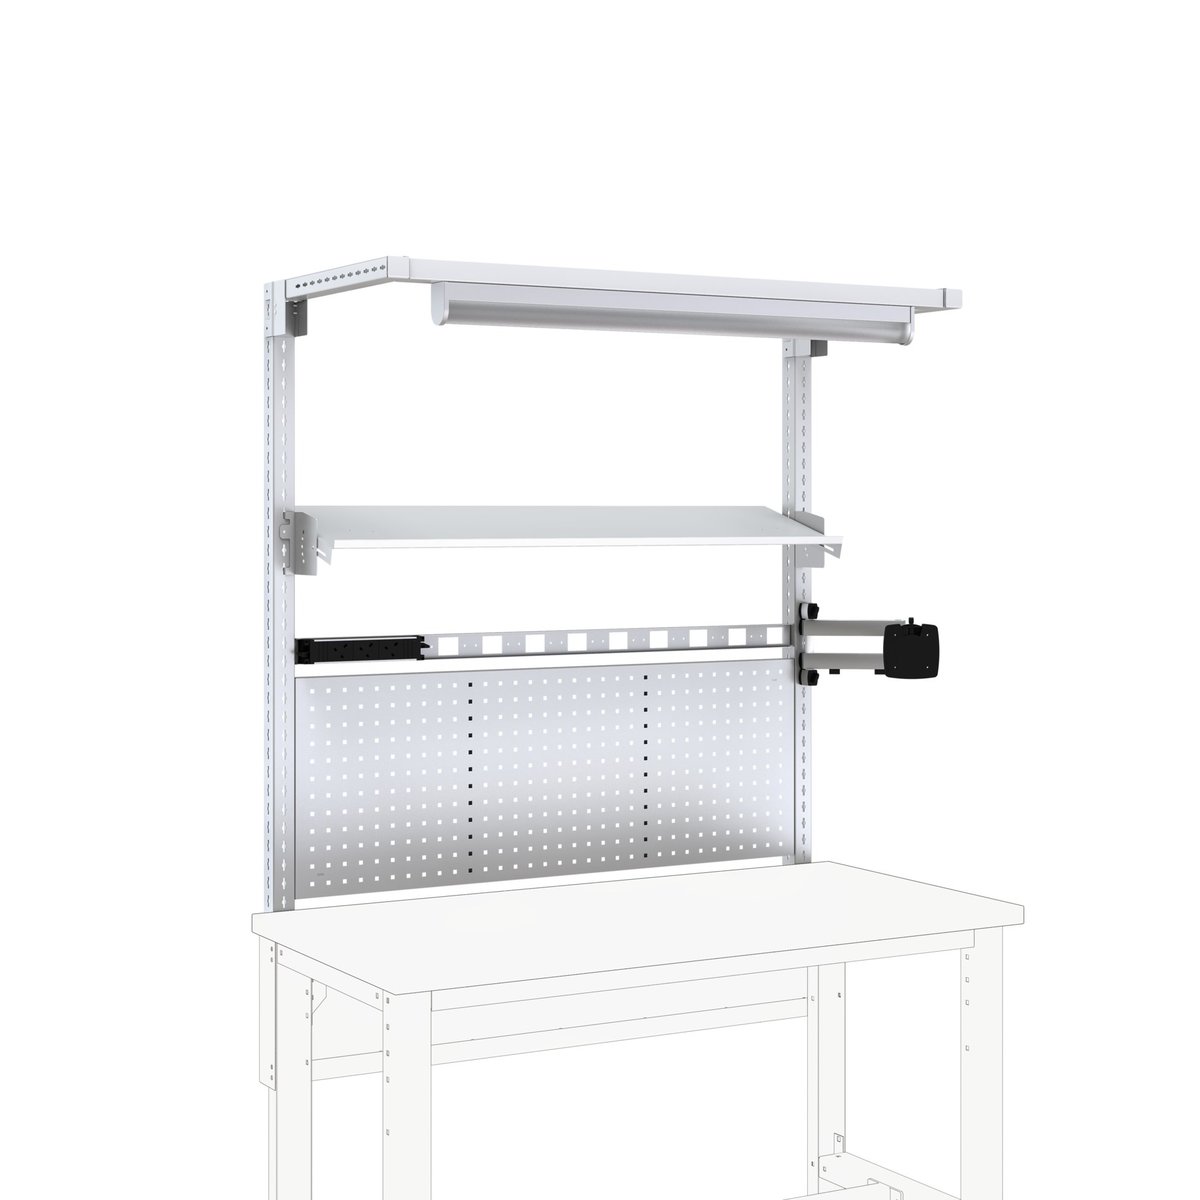 41010184.16 - cubio bench rear frame kit